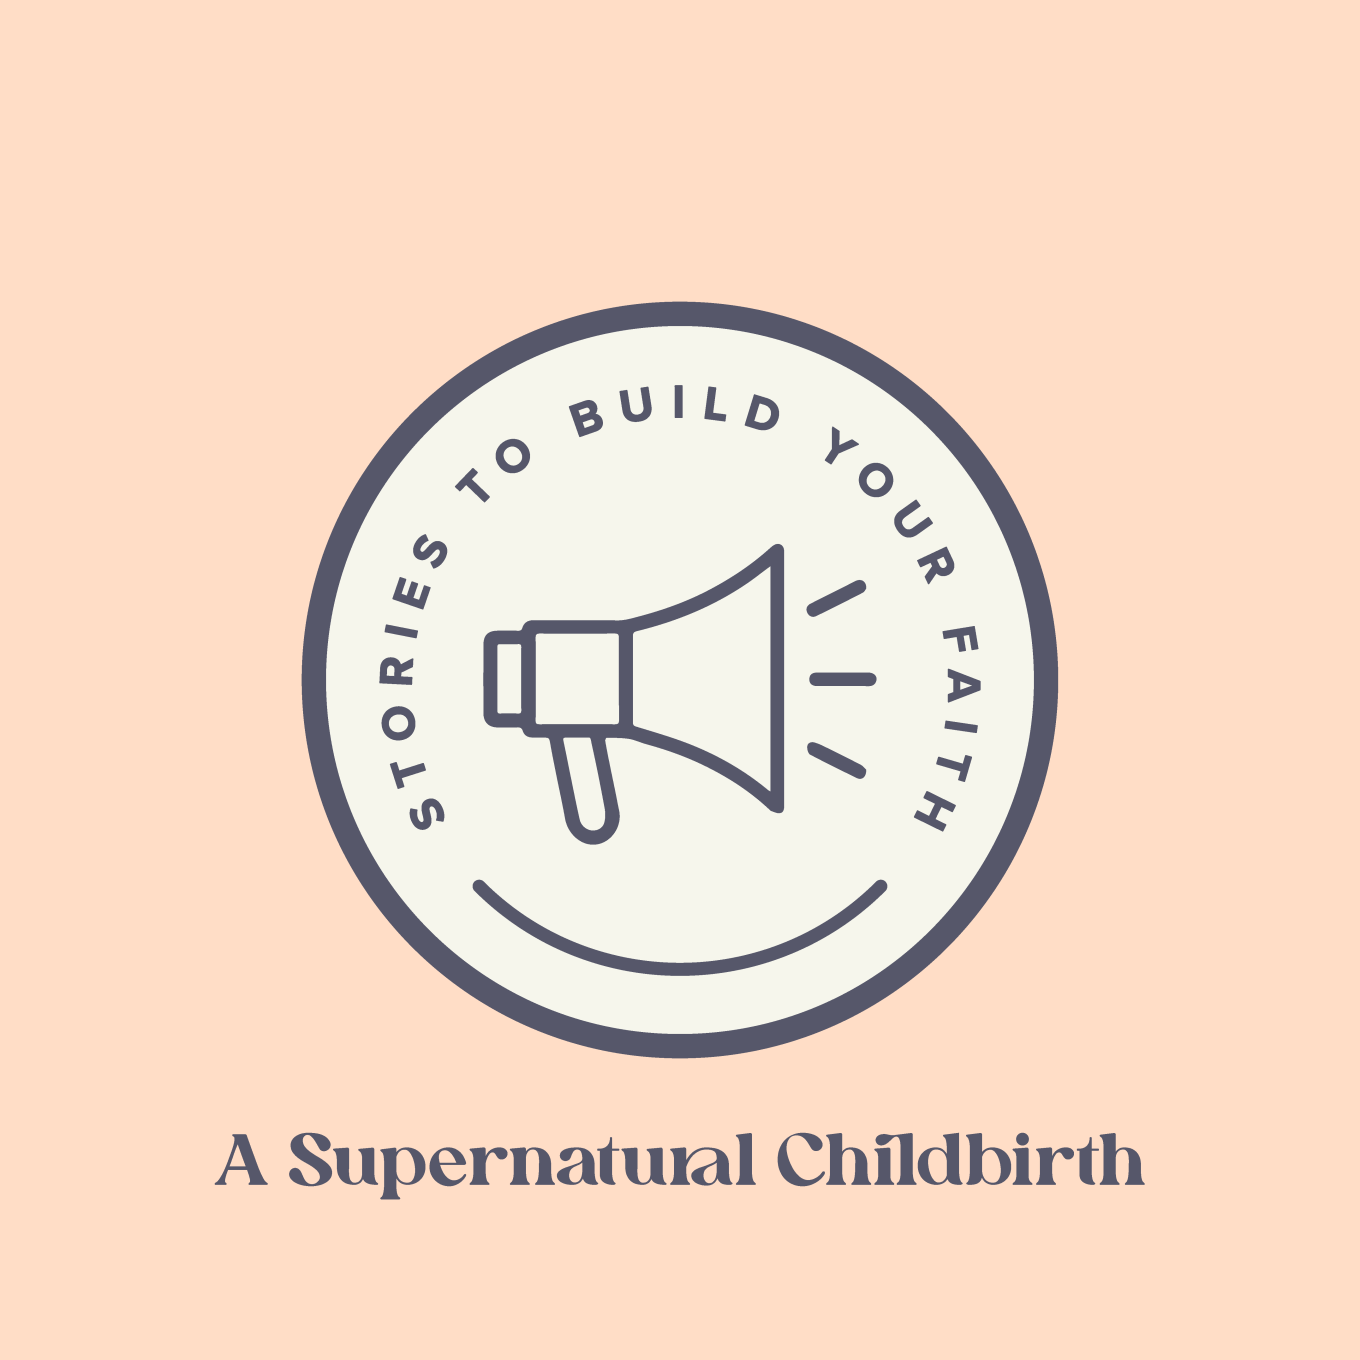 A Supernatural Childbirth